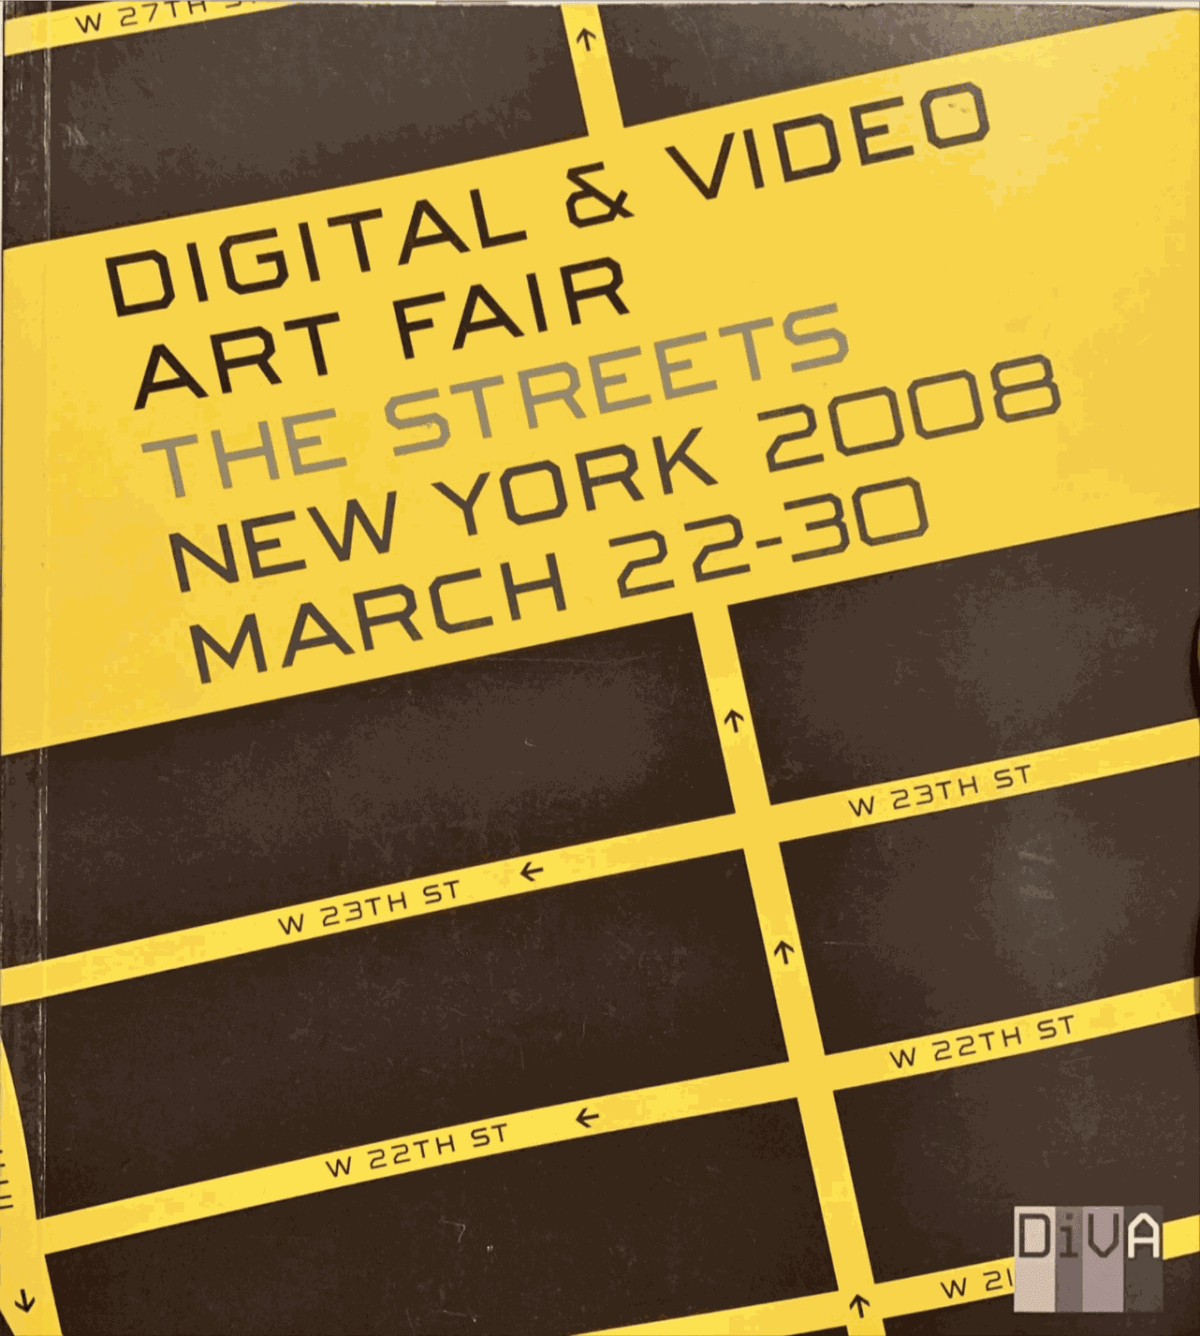 Digital & Video Art Fair